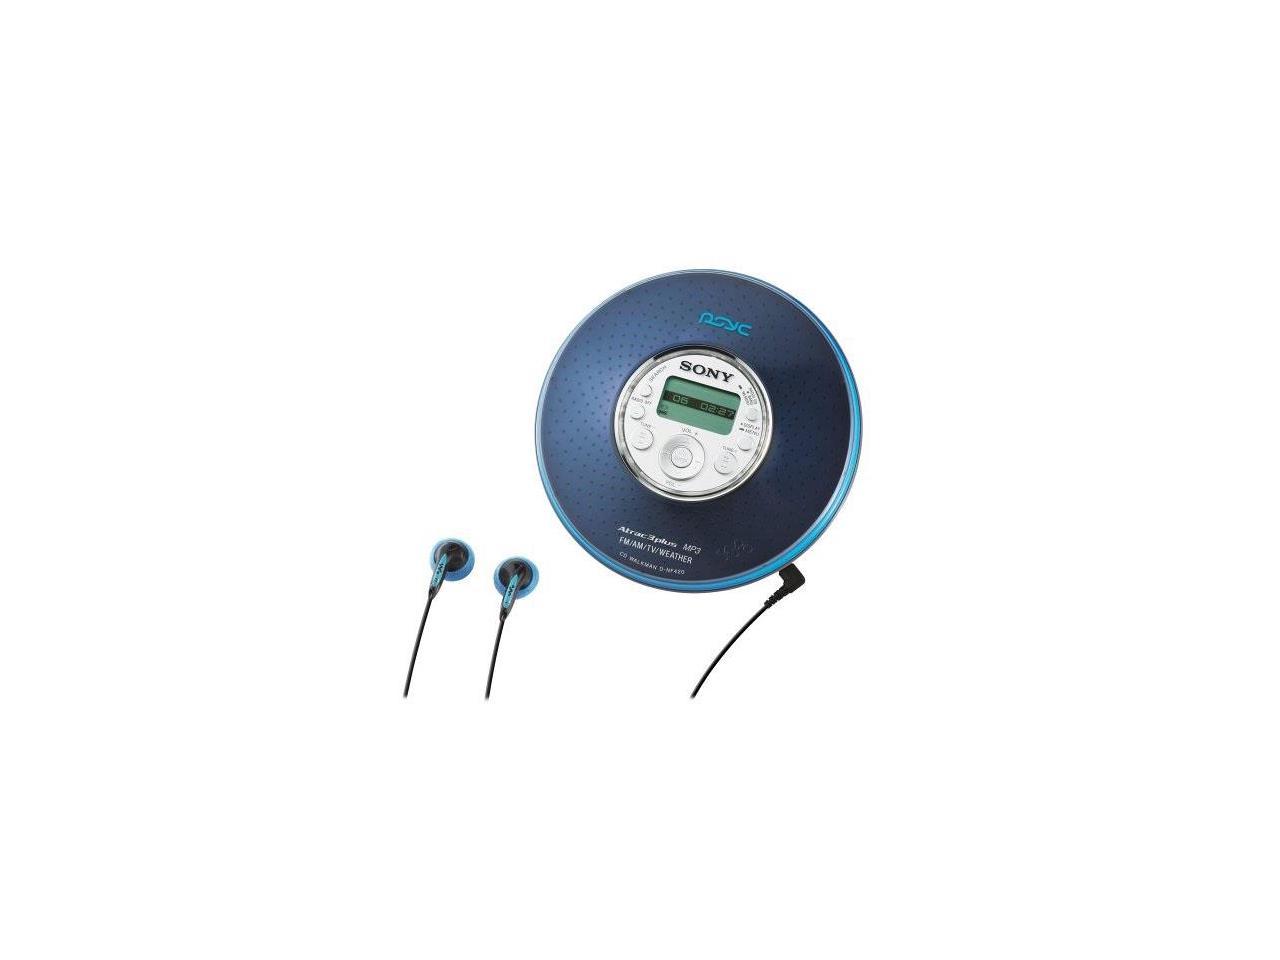 Sony D-NF420PS MP3/ATRAC3 Psyc CD Walkman with AM/FM Tuner Blue Blue 